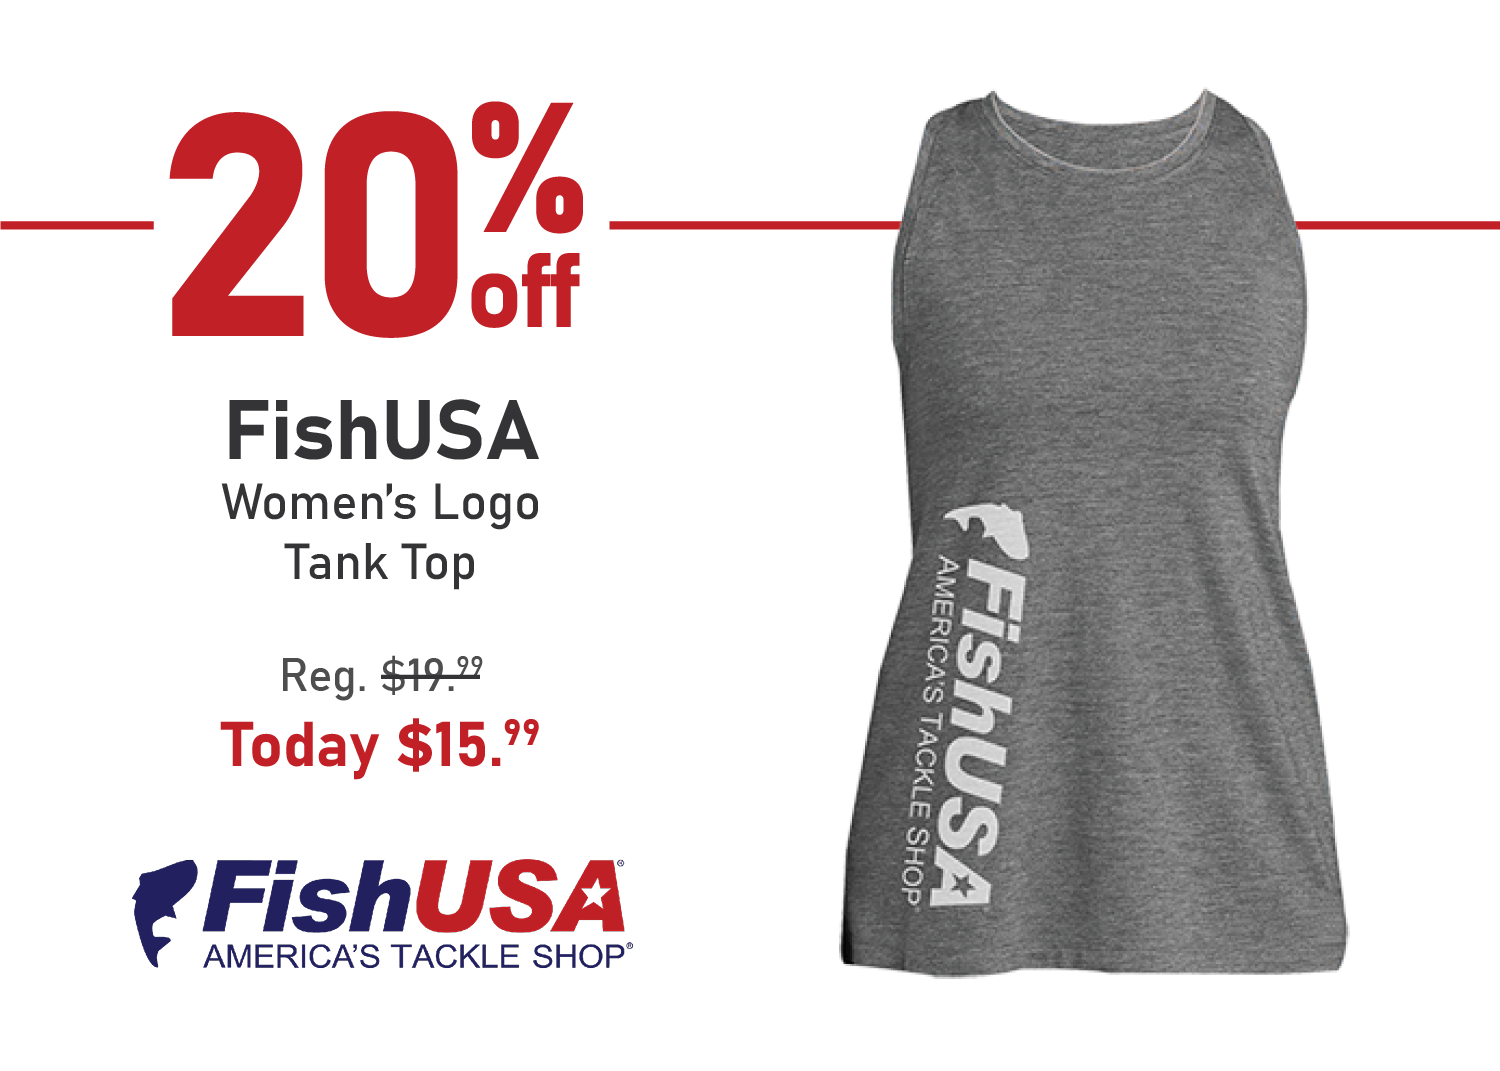 Save 20% on the FishUSA Women's Logo Tank Top